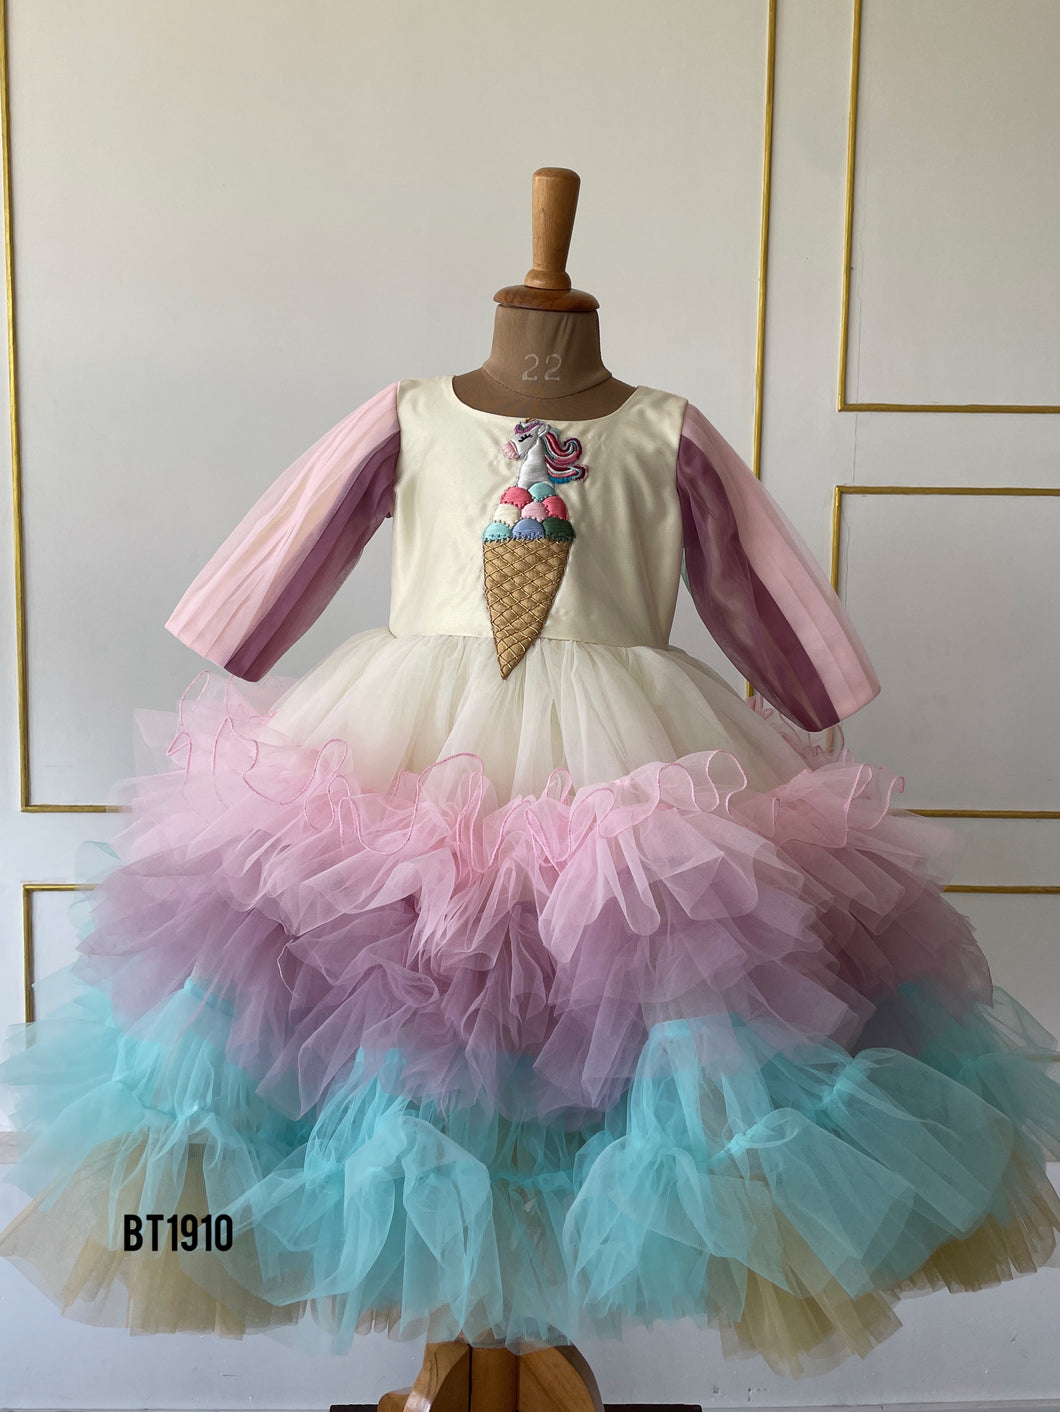 BT1910 Unicorn Candy Dream Party Dress